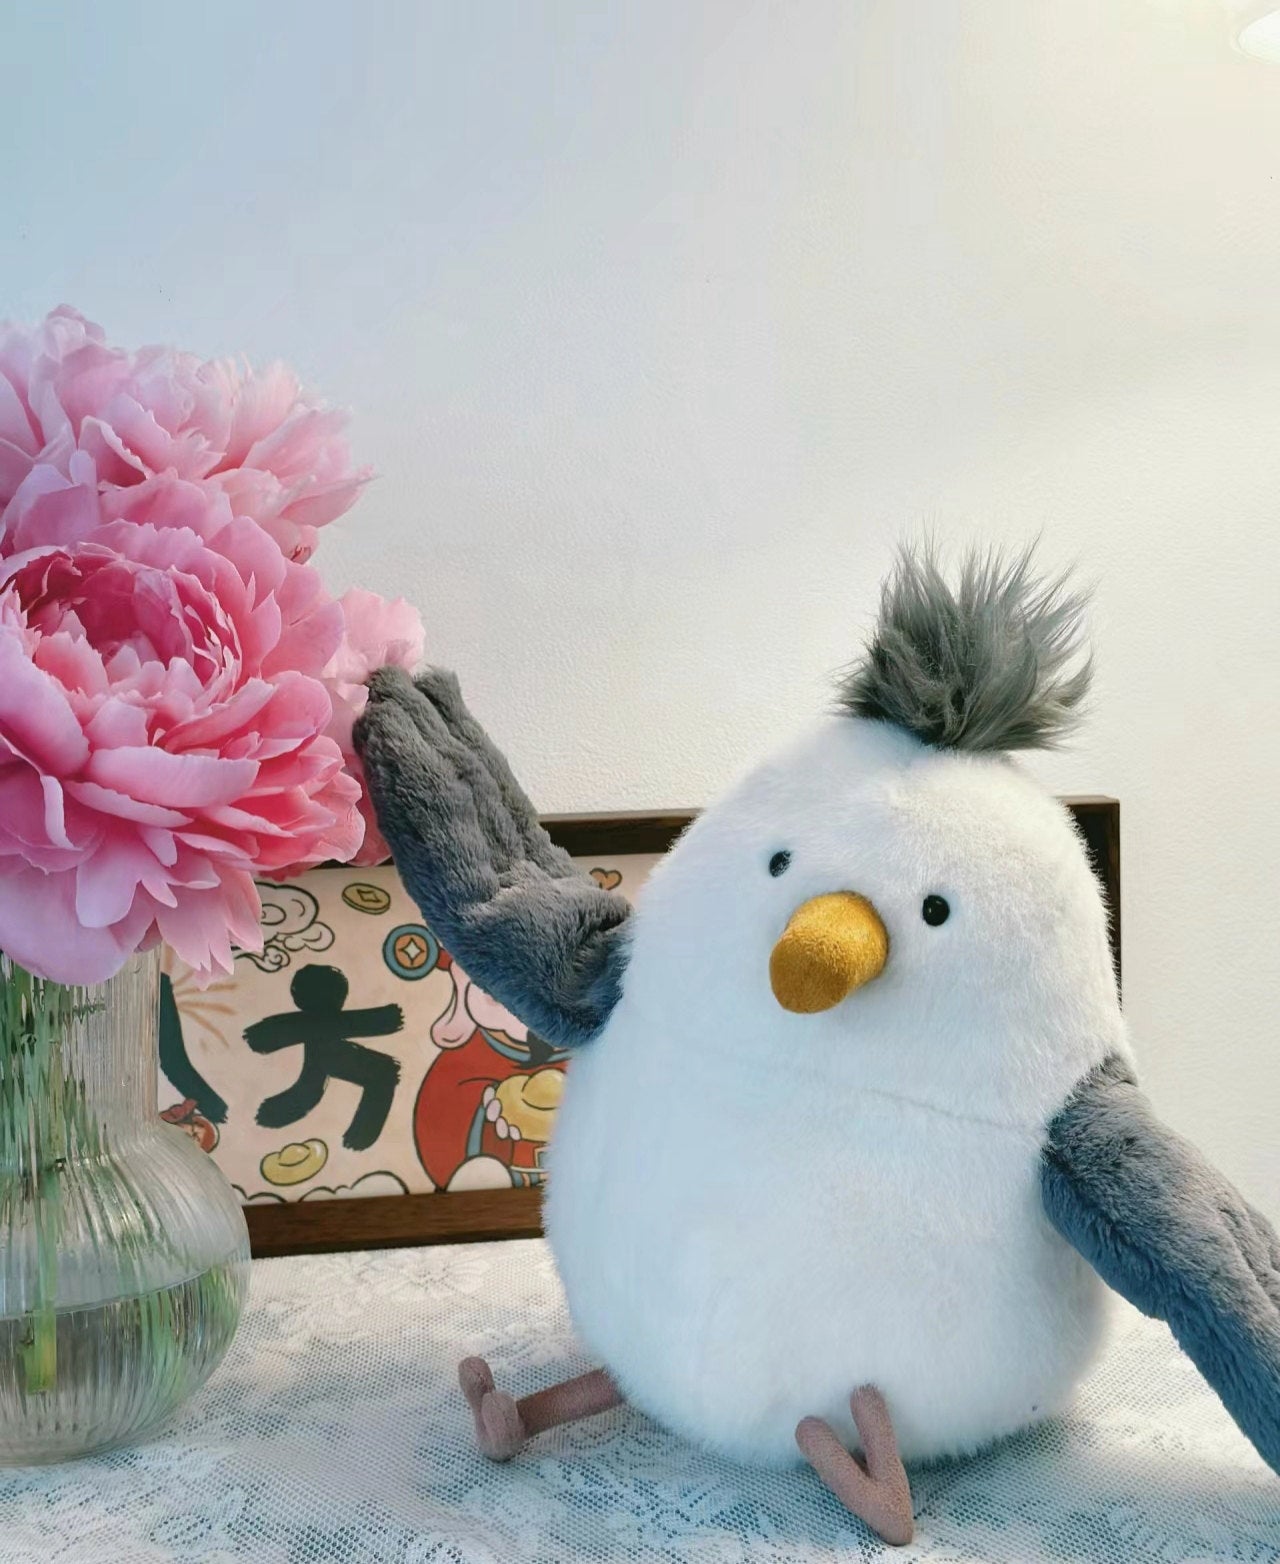 ELAINREN Cute Seagull Fat Plush Toys, Funny Sea Gull Stuffed Animal Festival Gifts/30cm